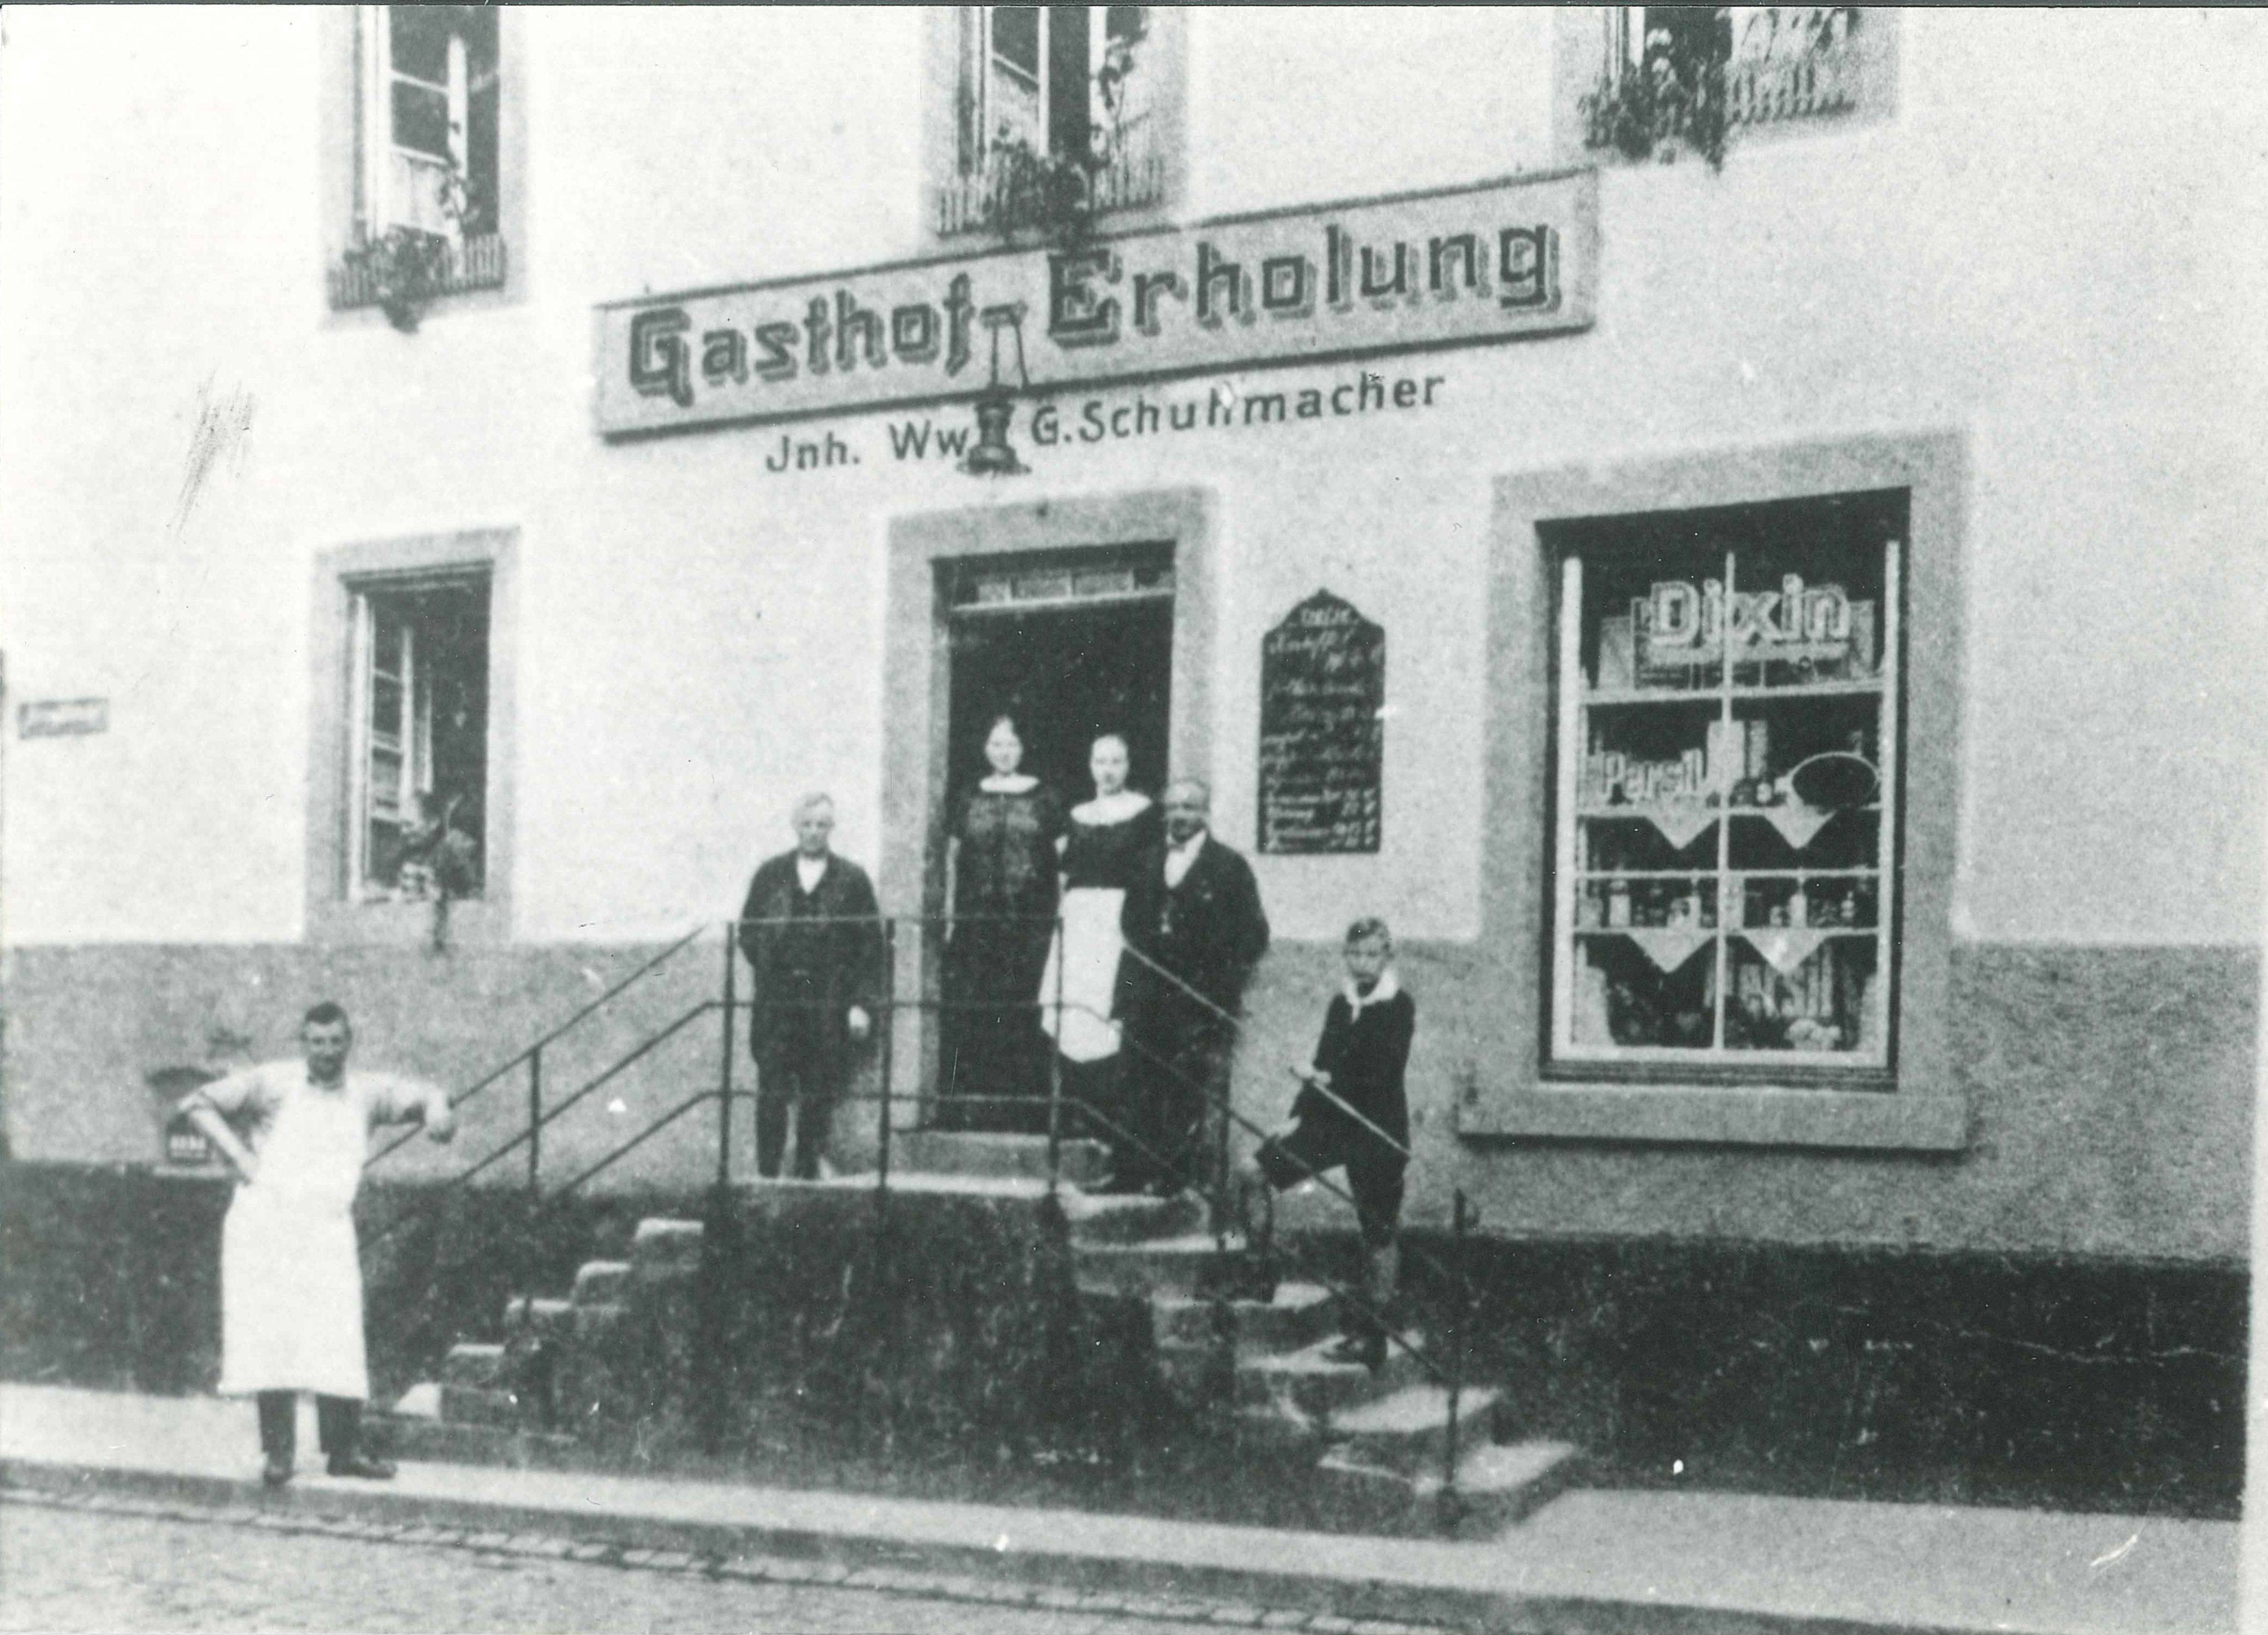 Gasthof "Erholung" in Bendorf, 1925/26 (REM CC BY-NC-SA)